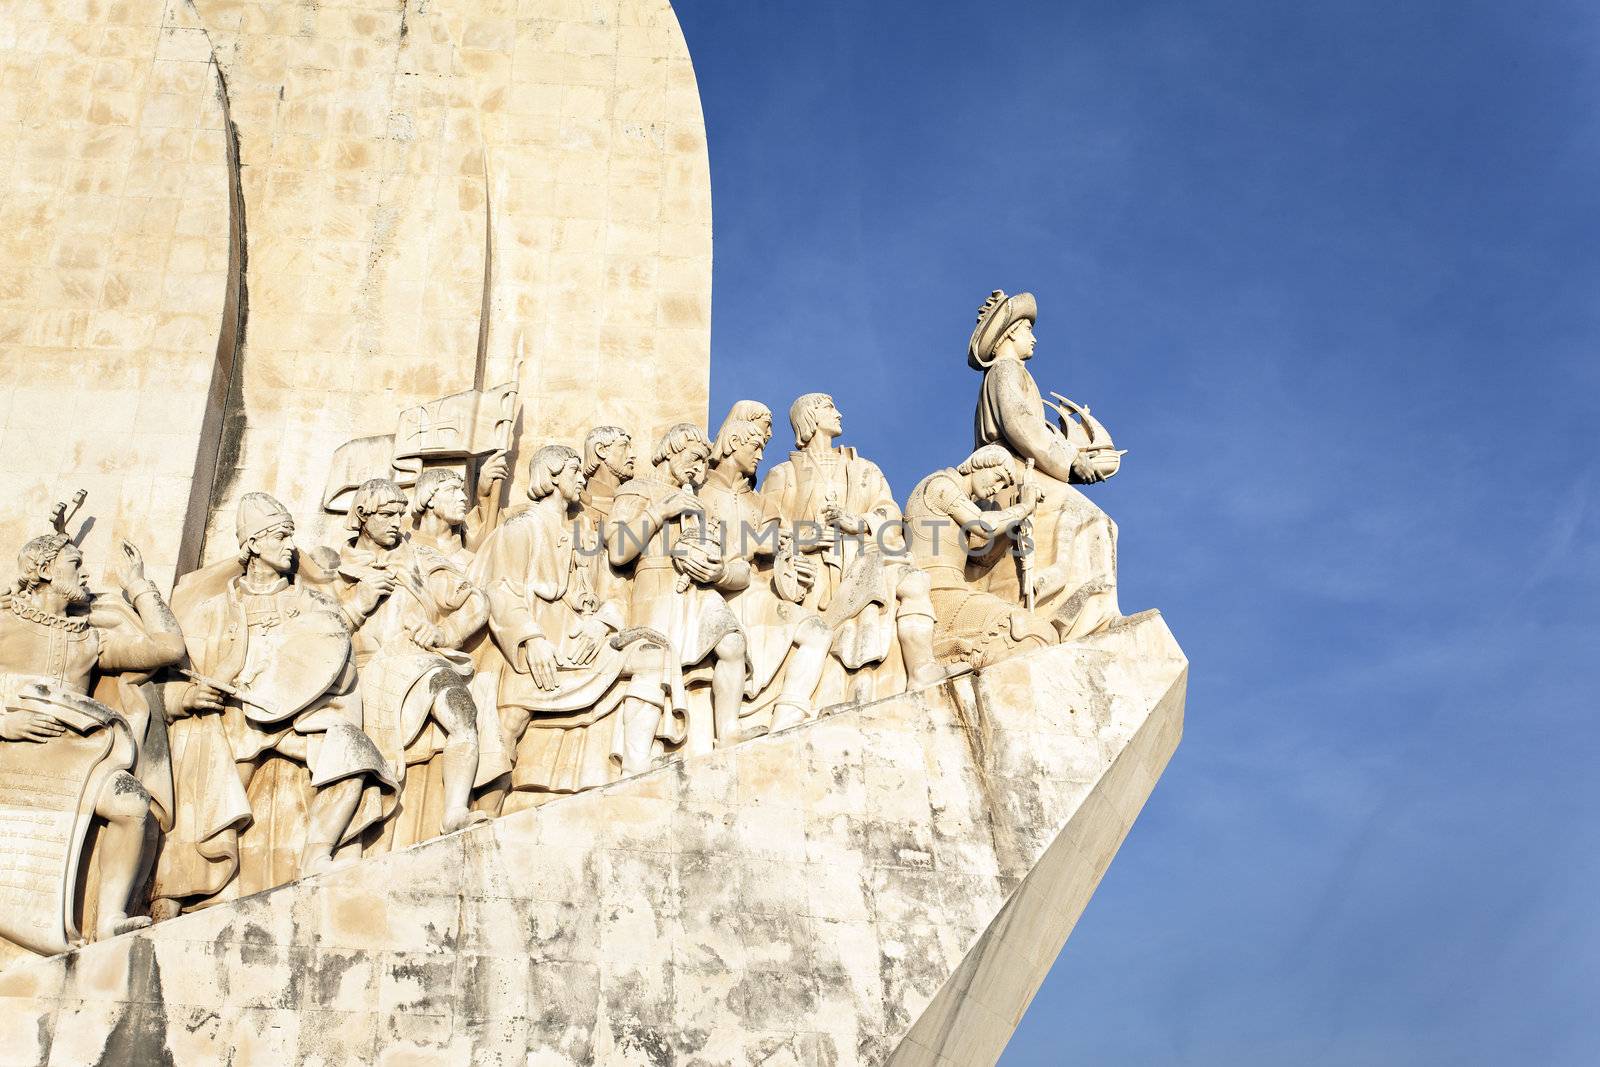 The Padrao dos Descobrimentos, monument in Lisbon